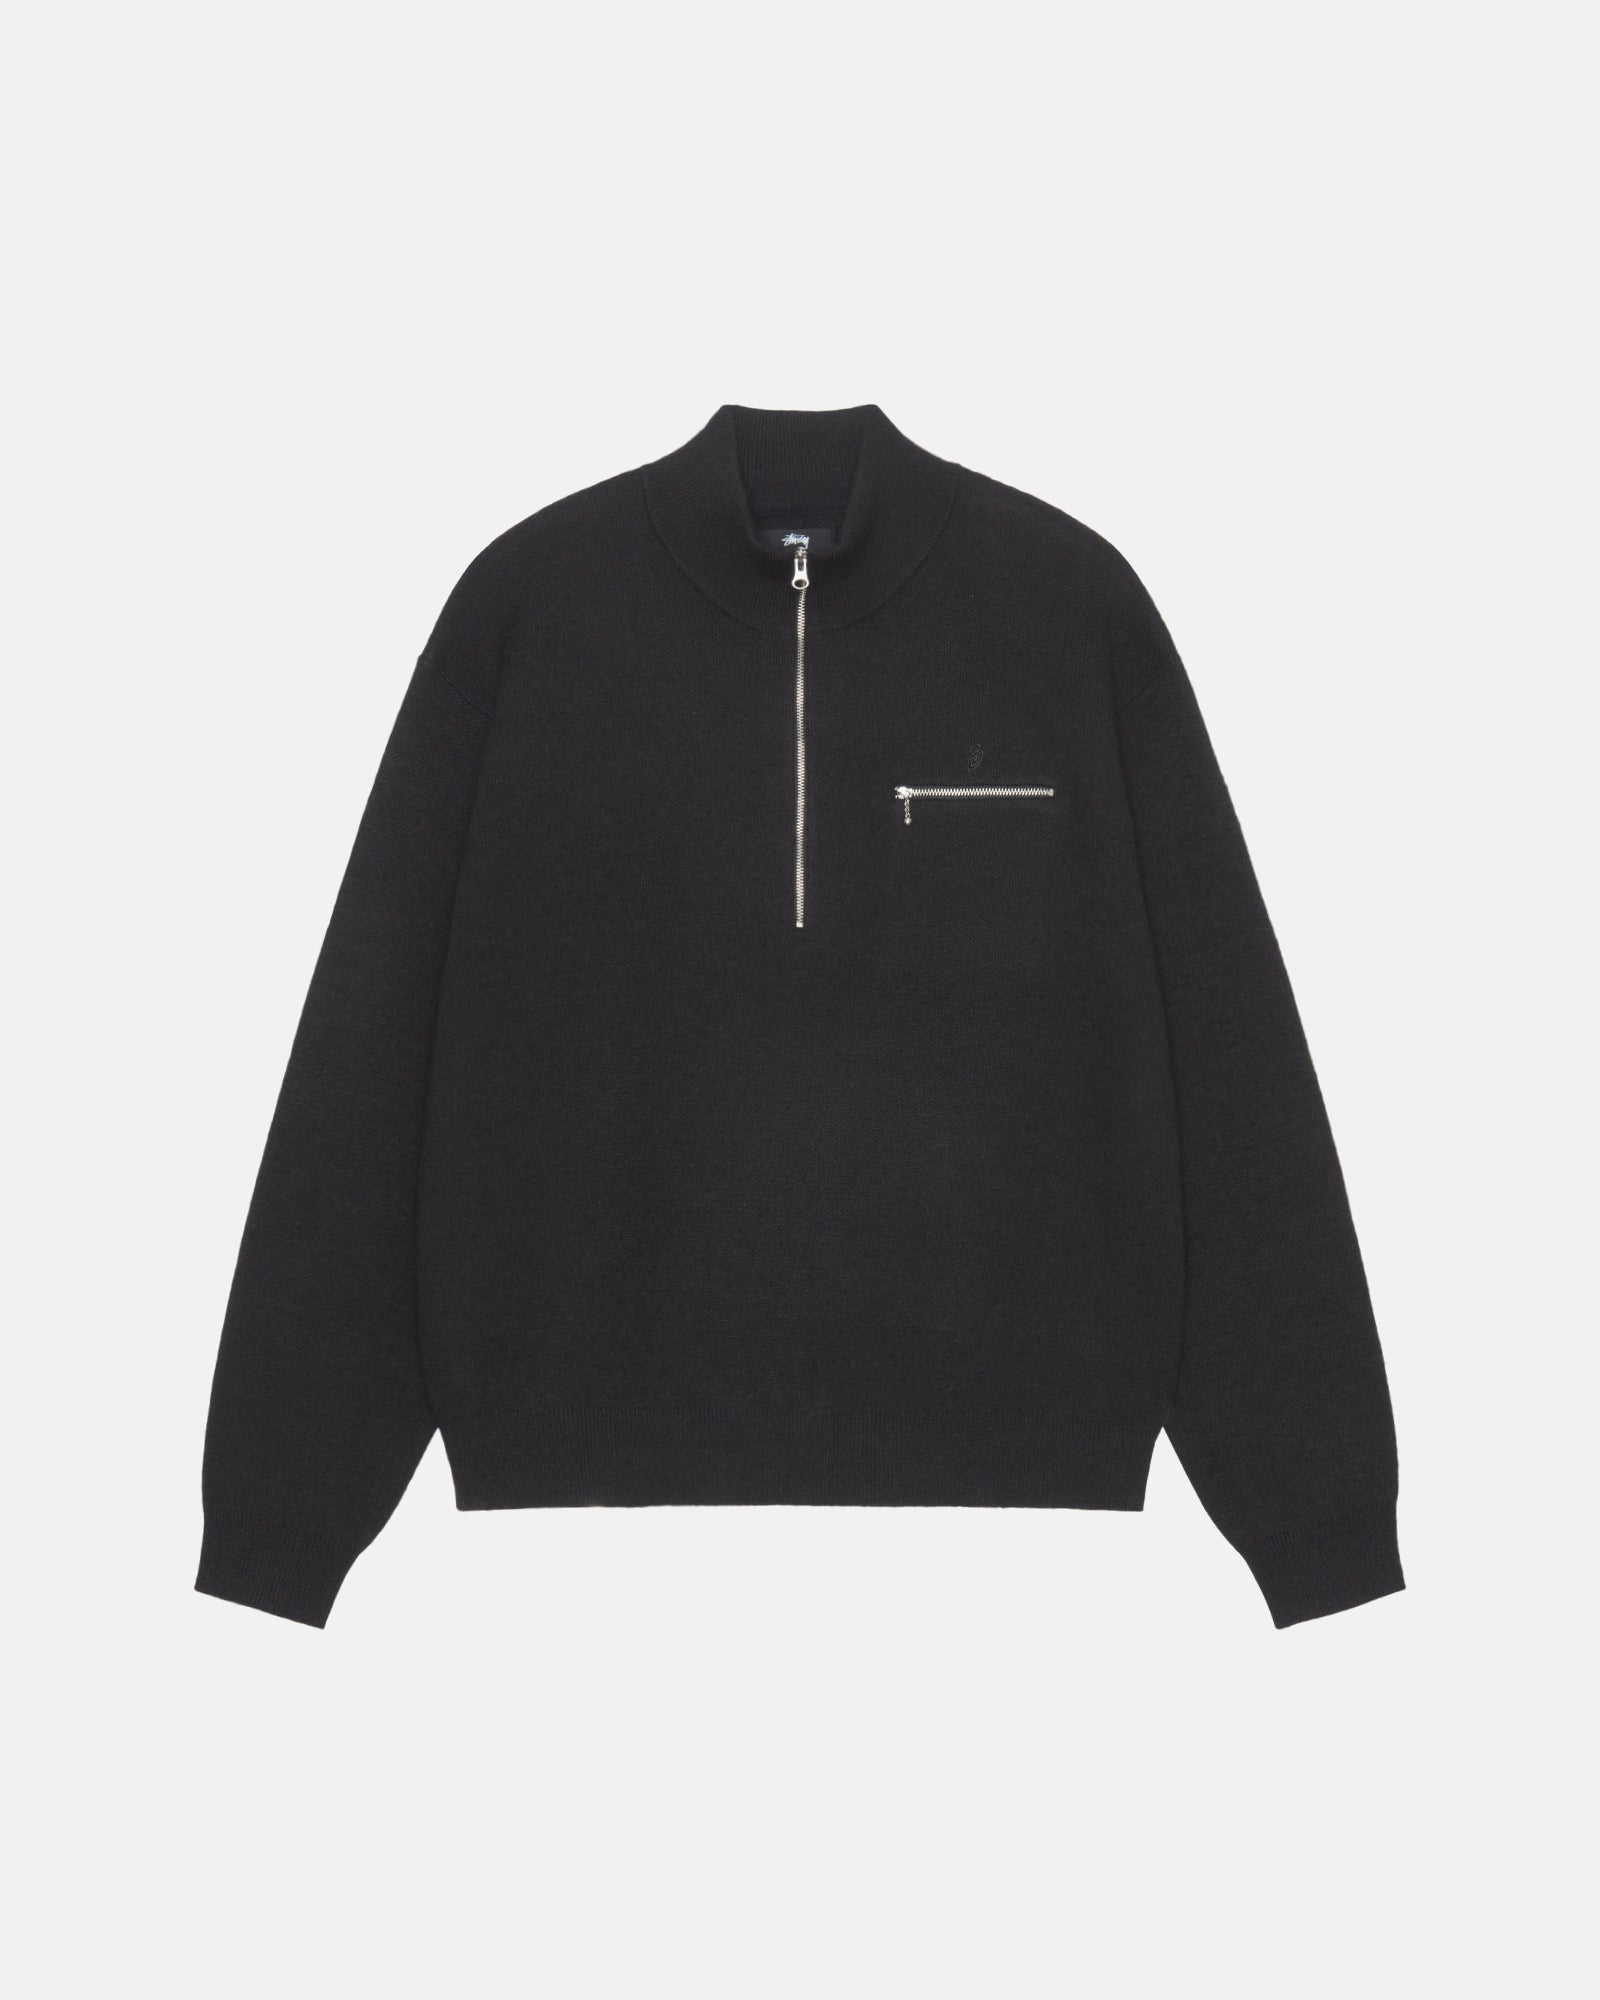 Half Zip Mock Neck Sweater in black – Stüssy Japan